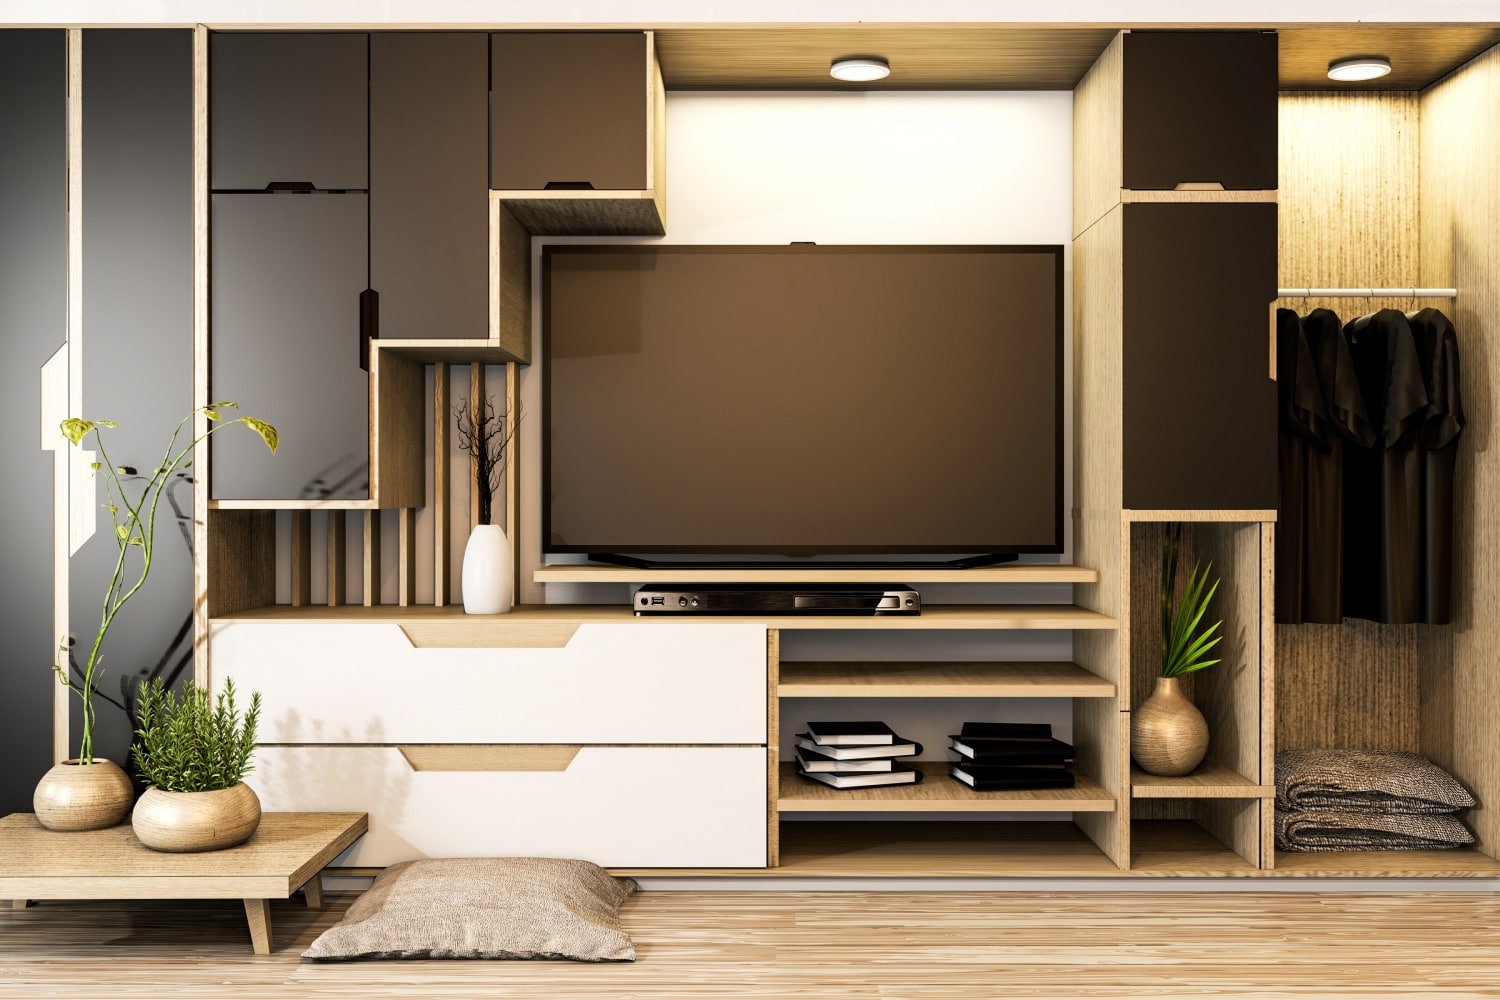 cabinet tv mix wardrobe shelf wooden japanese style decoration plants shelf 3d rendering 1